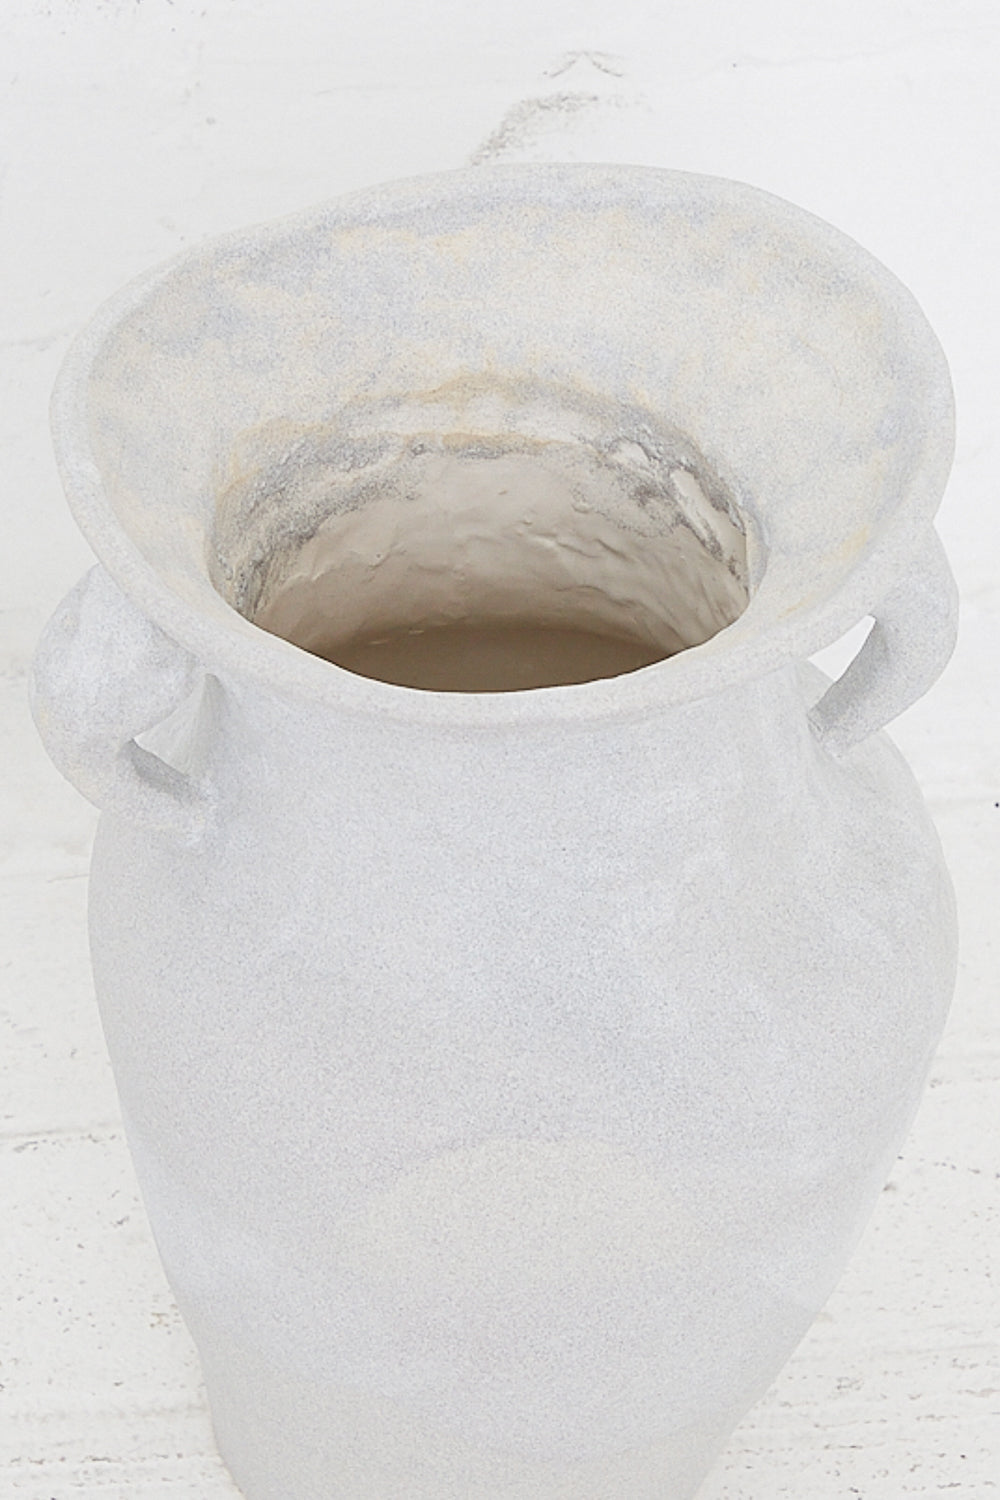 ANK Ceramics - Urn Vessel in White detail view